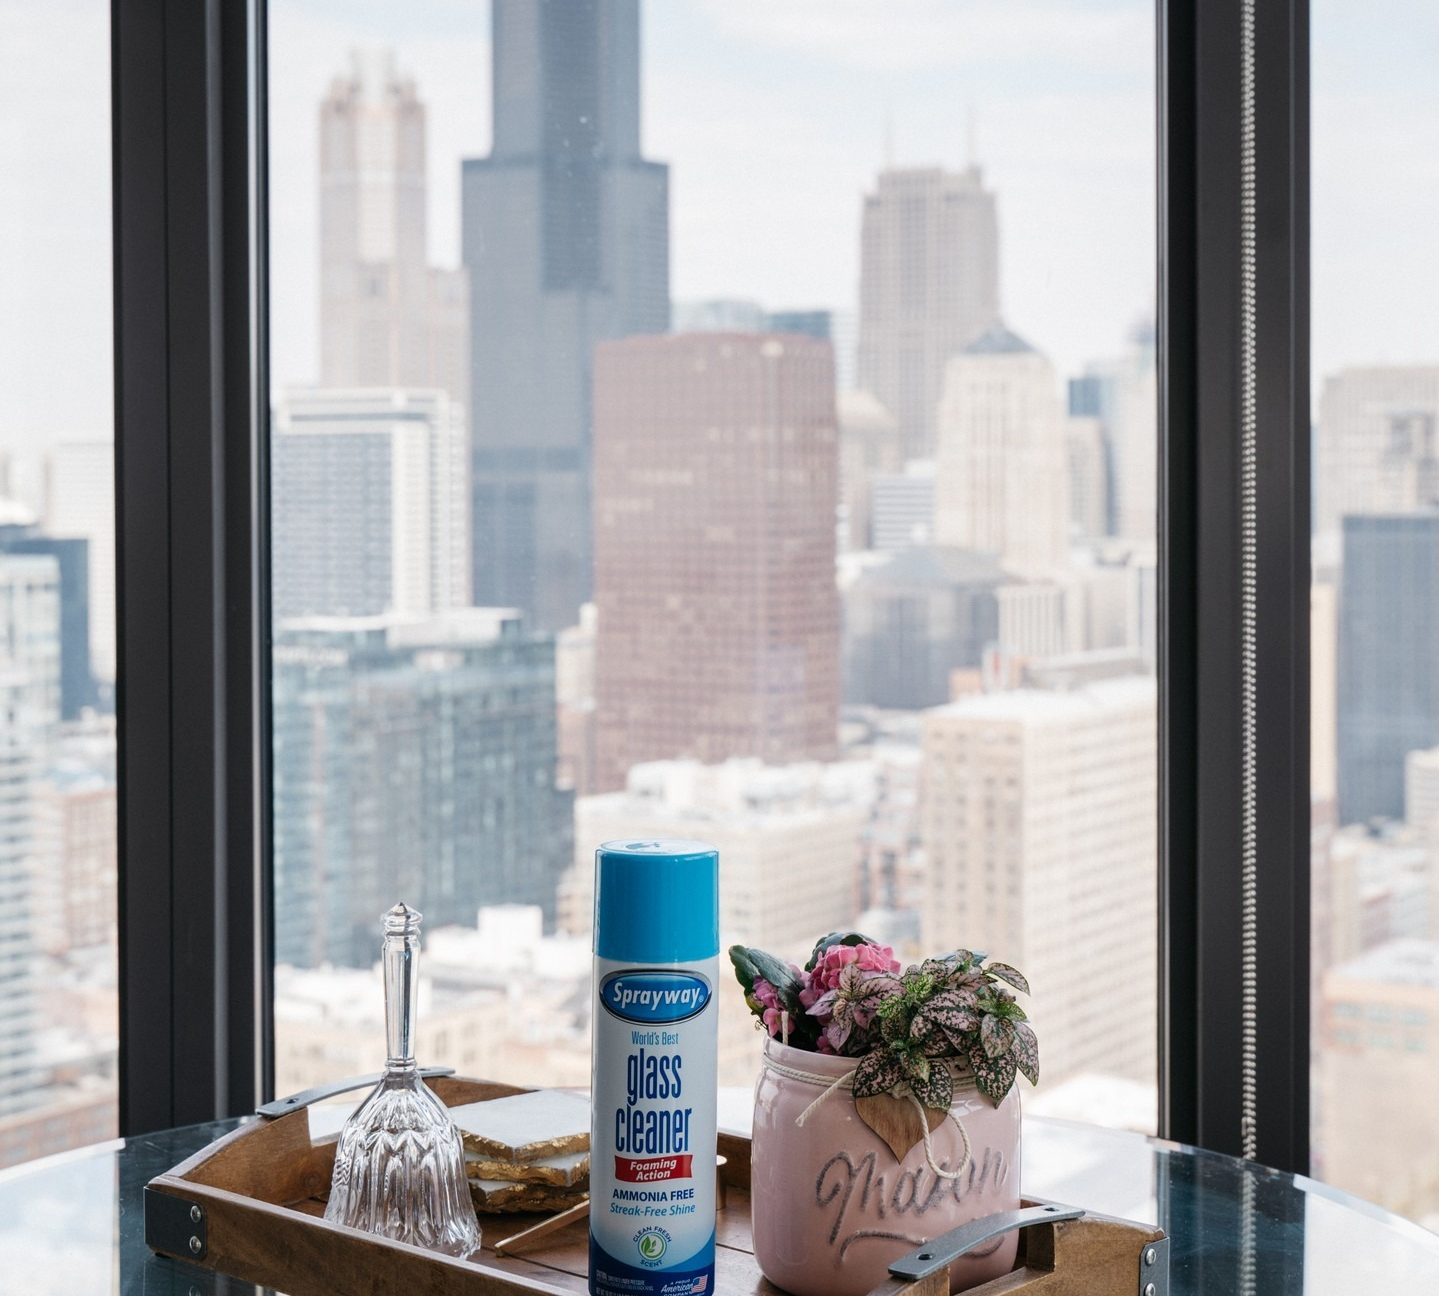  CHOMP! Shower Door Water Repellent: Healthier Home  ShowerDoorMagic 6 in 1 Hard Water Stain Preventer for Glass, Fiberglass,  Tile & More- Spot, Soap Scum, Calcium & Limescale Prevention 32 oz. 